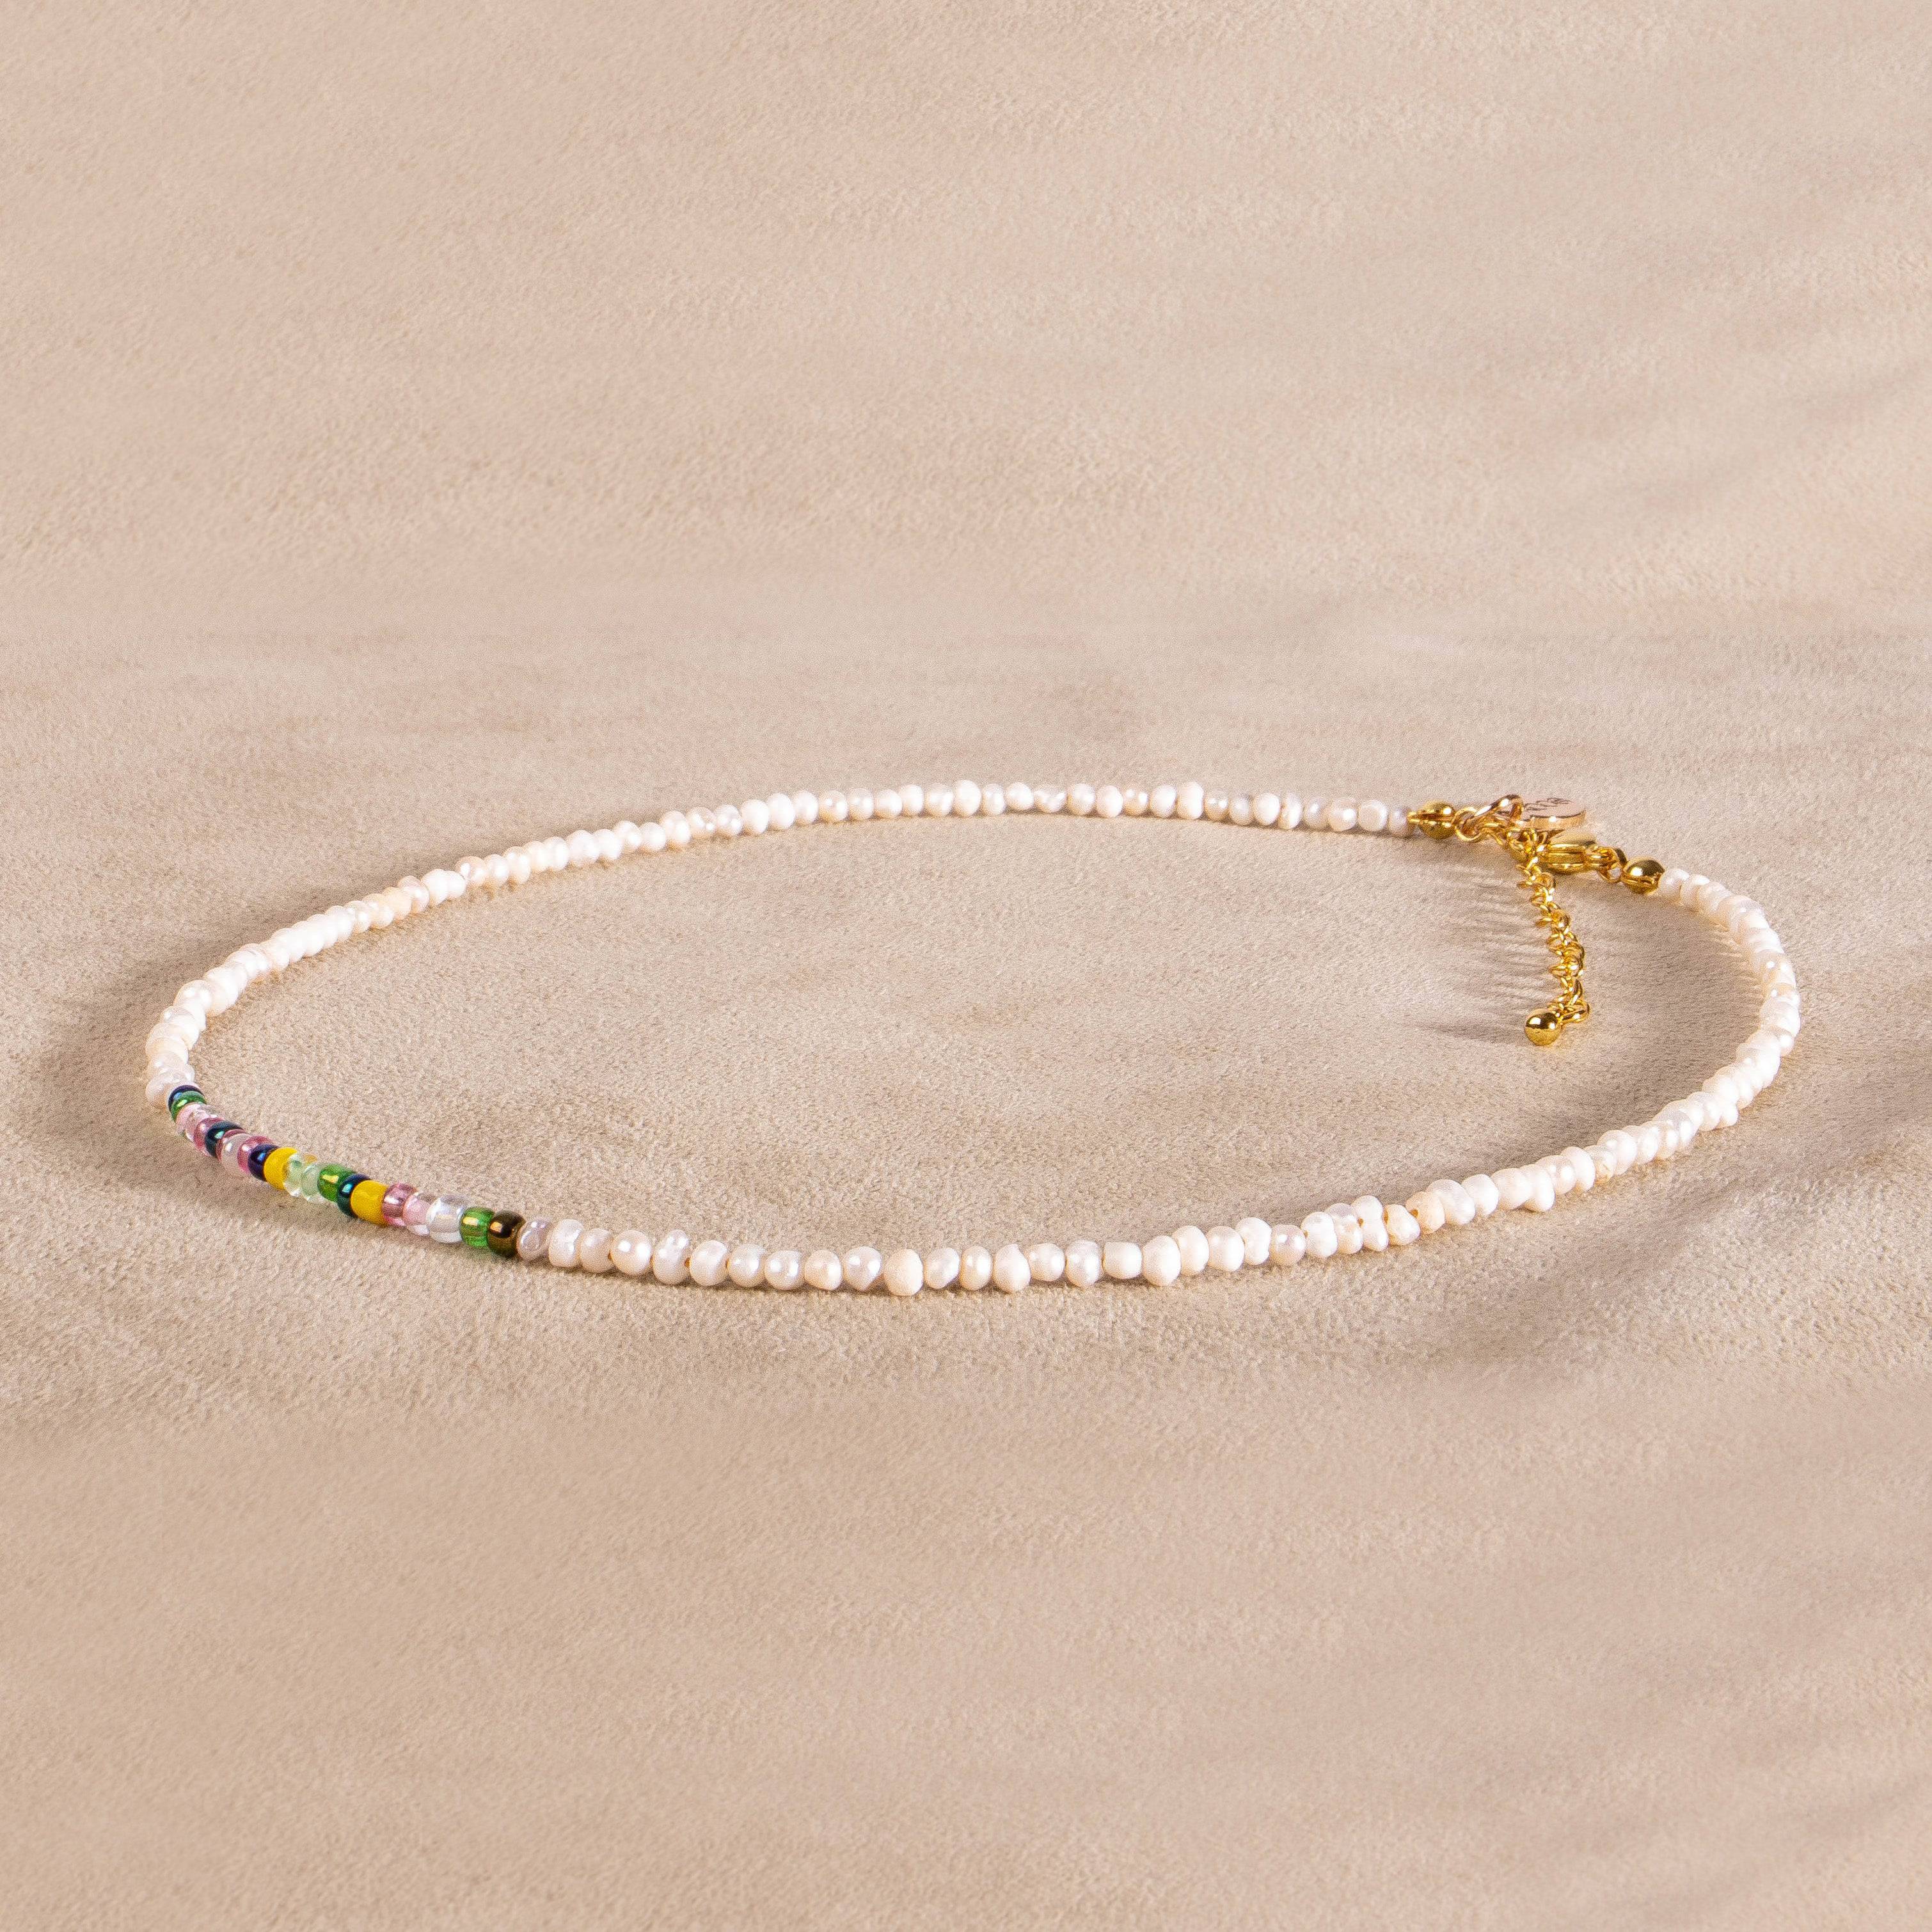 Perlenkette mit bunten Rocailles Perlen grün, gelb, rosa handgemacht gold - NooeBerlin